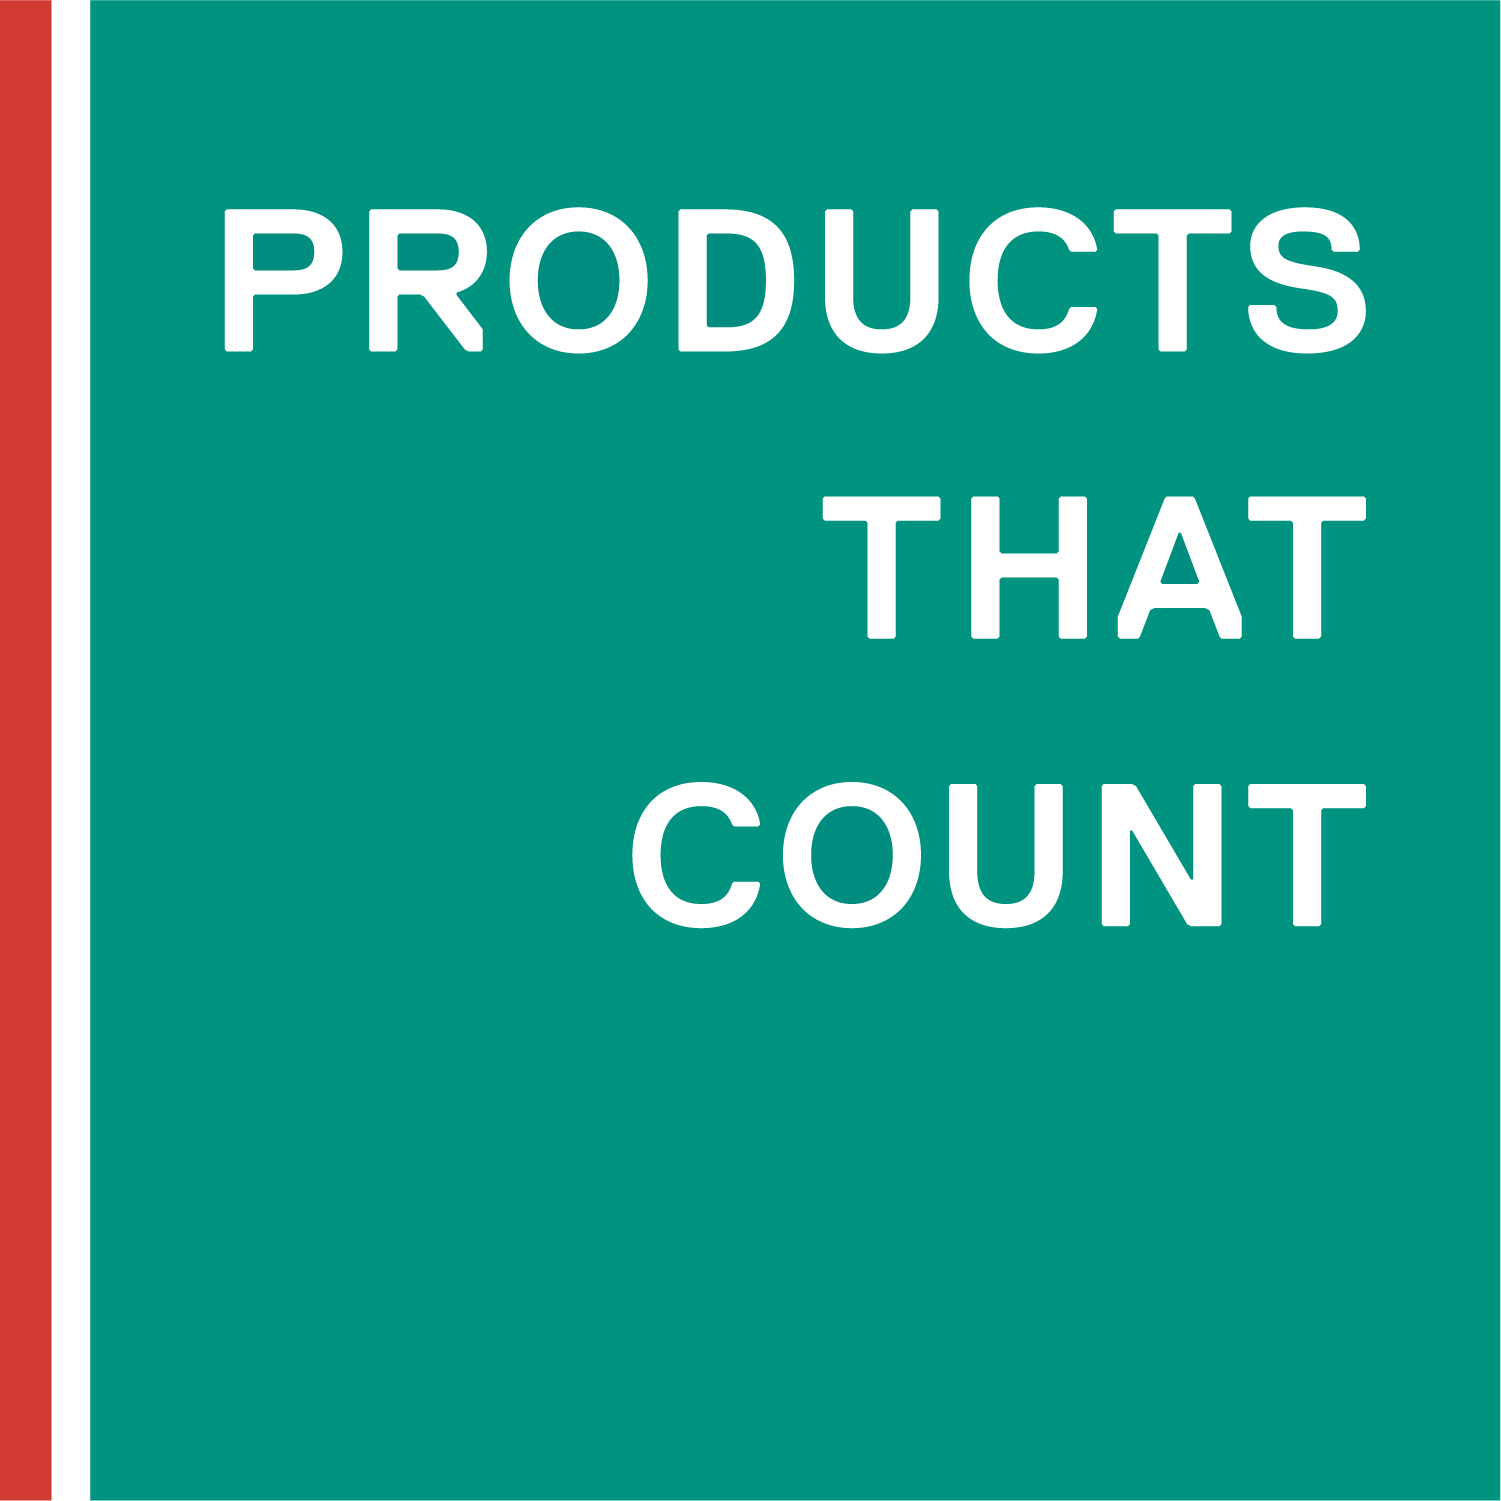 (c) Productsthatcount.com